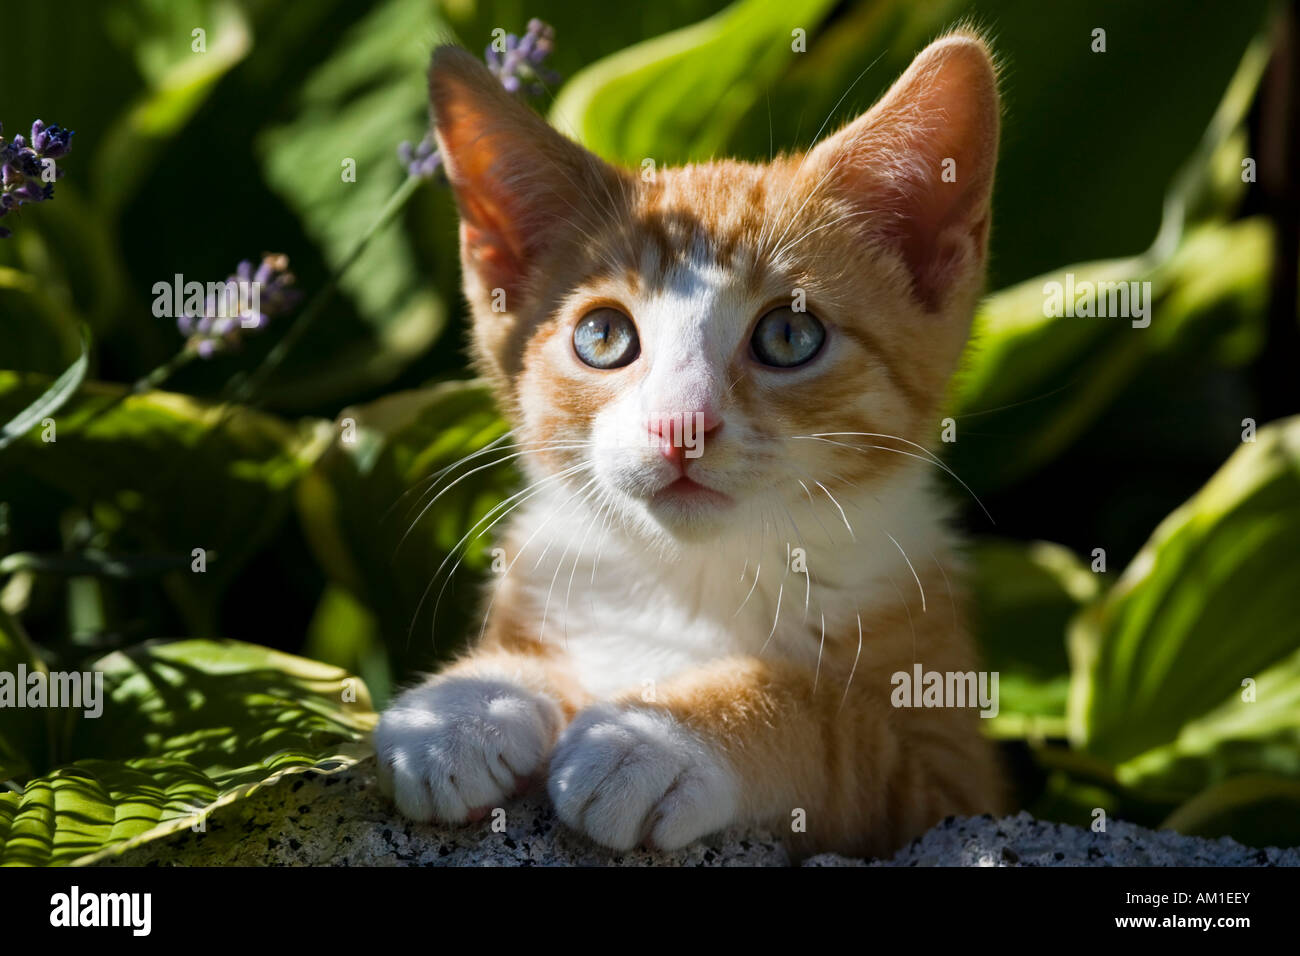 European shorthair cat between plants Stock Photo